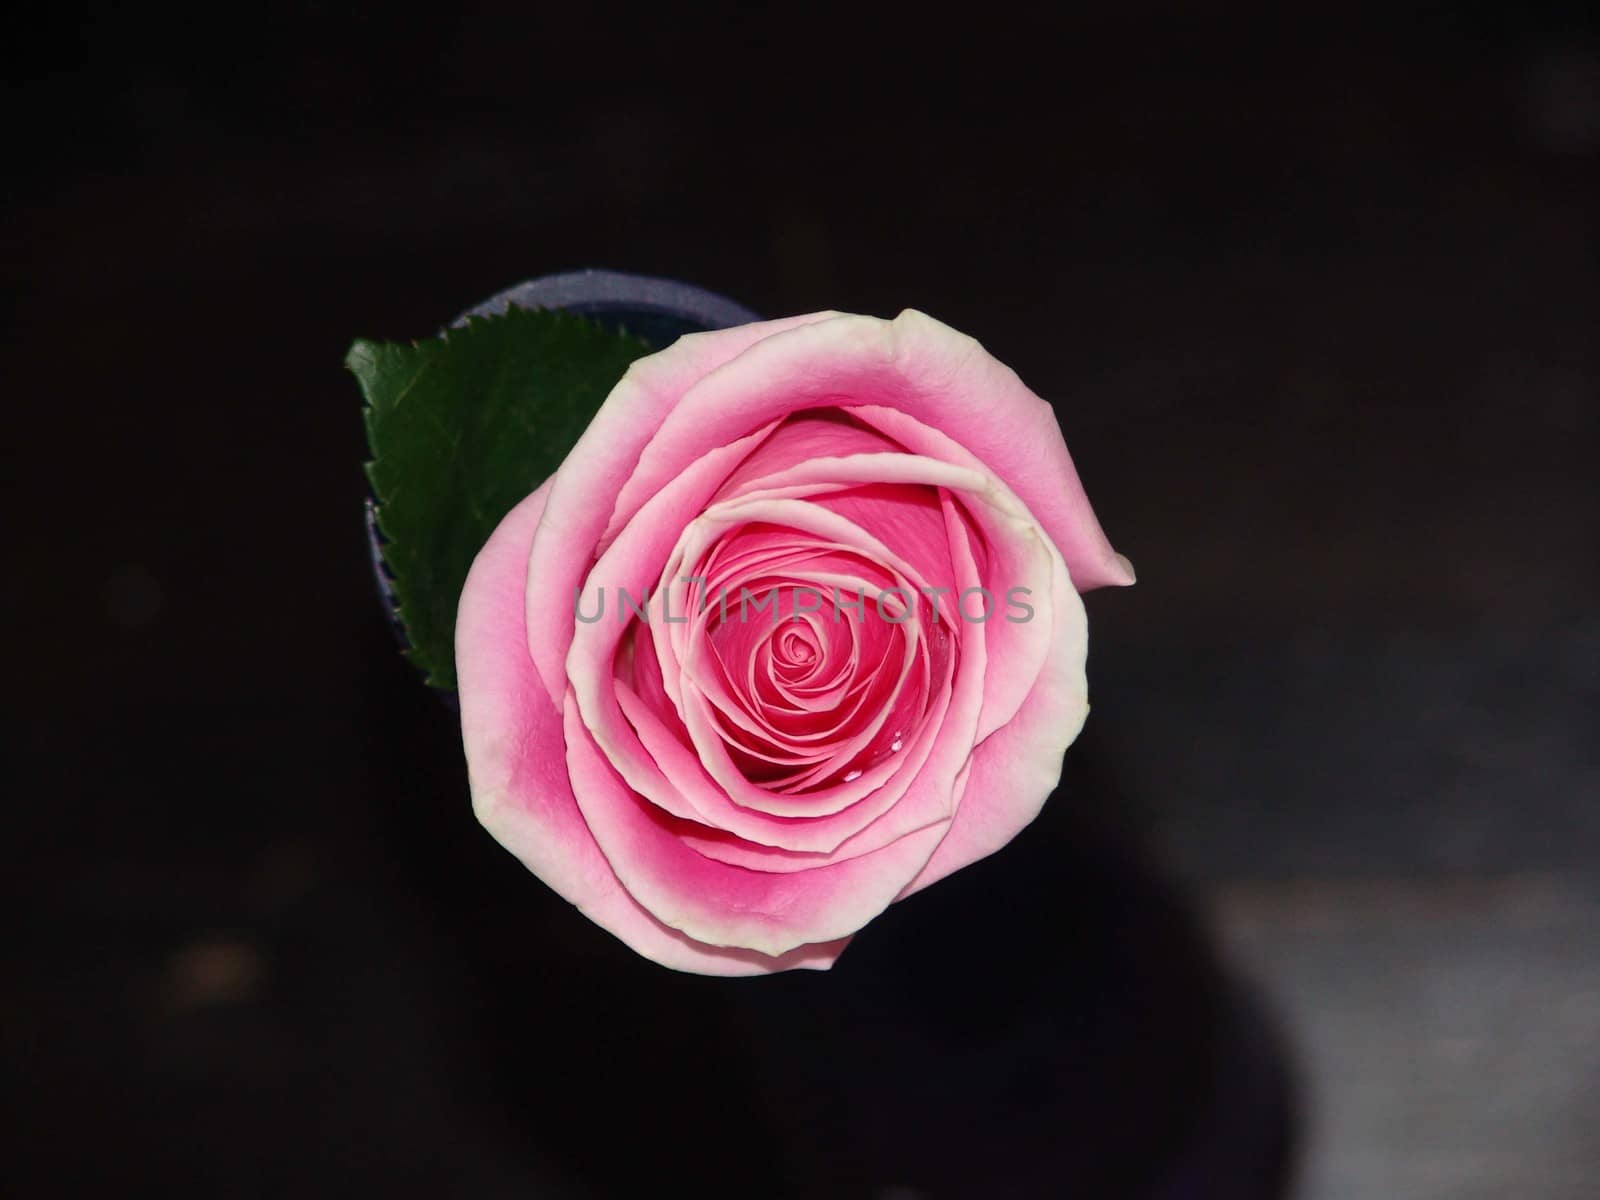 single pink rose on dark background by elena_vz